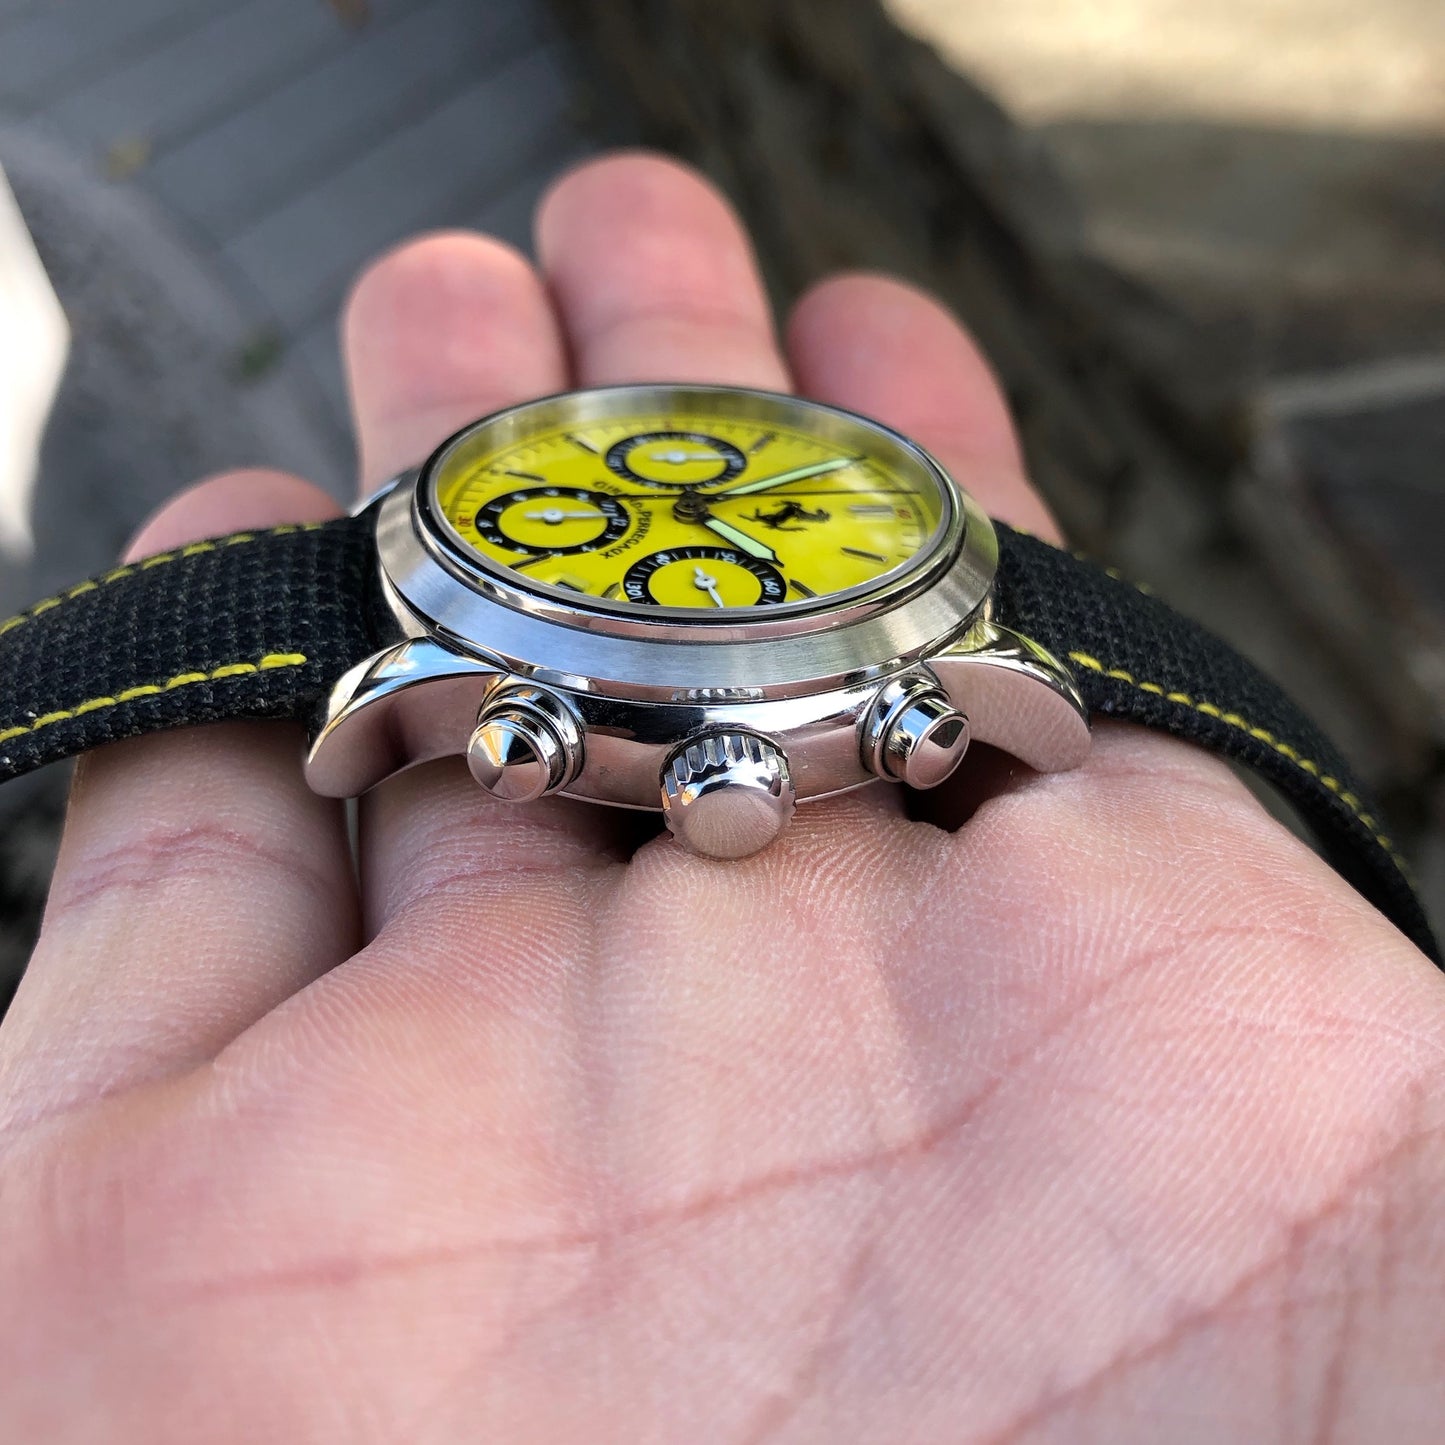 Girard Perregaux Ferrari 8020 Yellow Modena Dial Chronograph Steel Automatic Wristwatch - Hashtag Watch Company